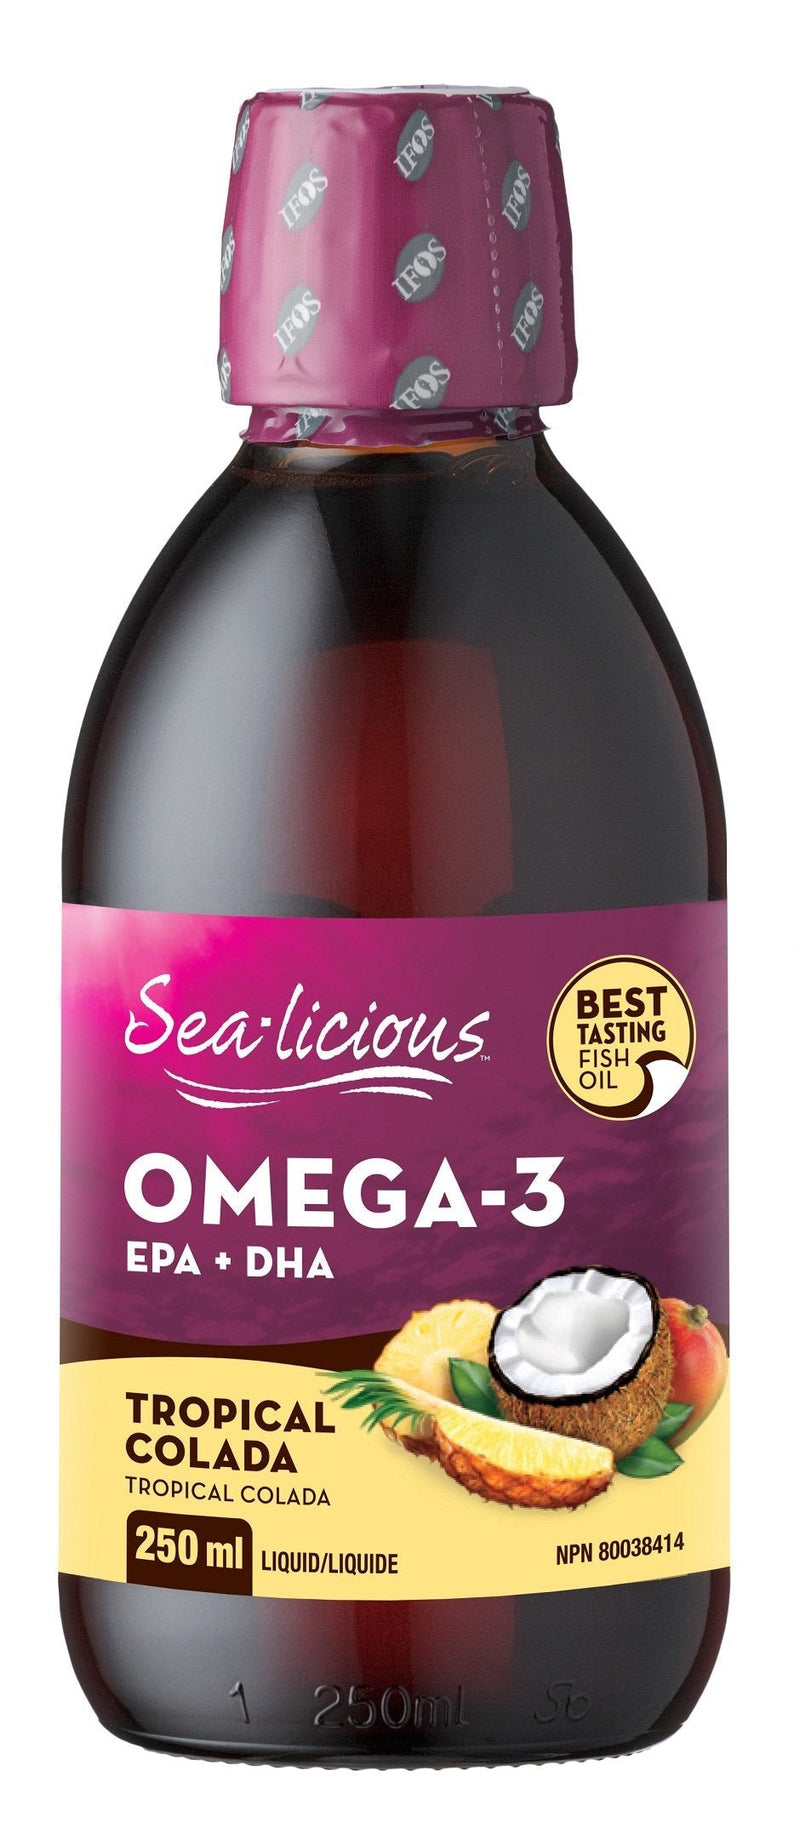 Karlene's Sea-licious Omega-3 with EPA + DHA - Tropical Colada Image 1